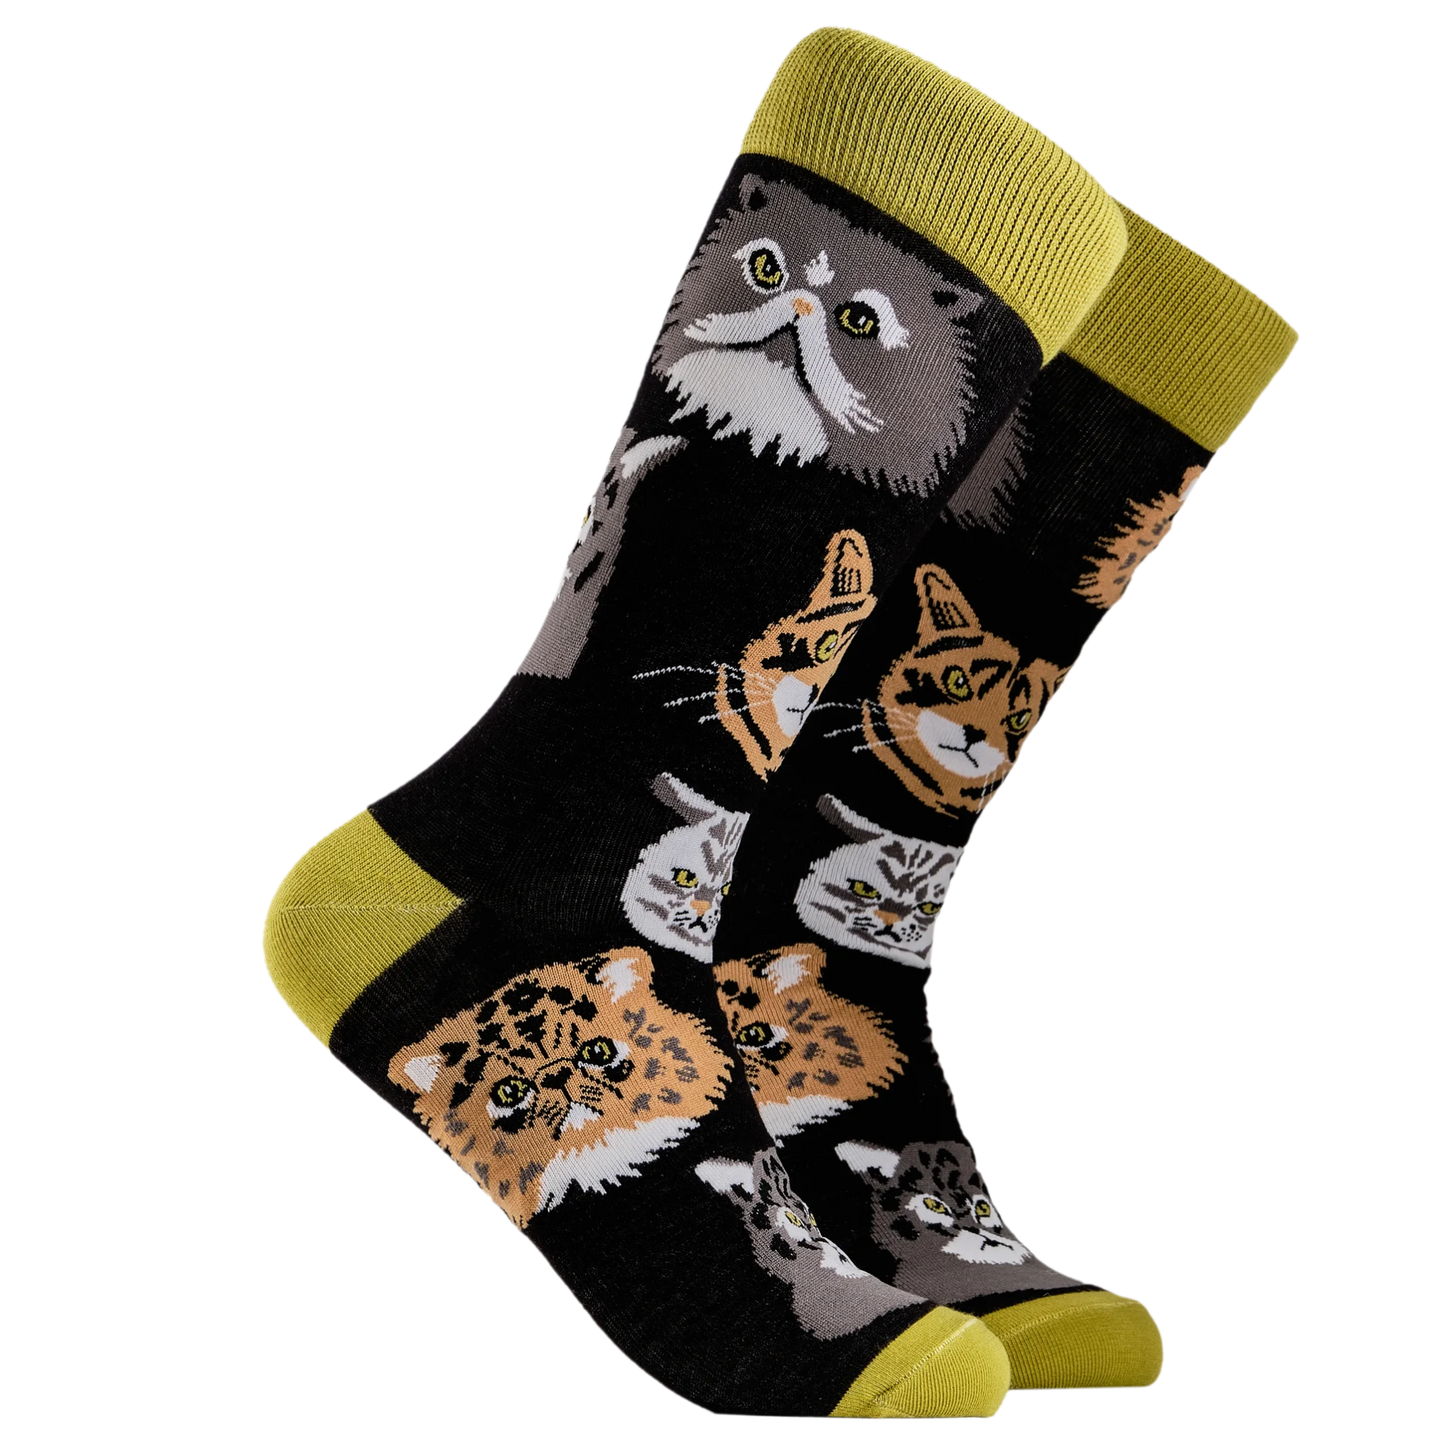 A pair of socks depicting various grumpy cats. Black legs, green cuff, heel and toe.